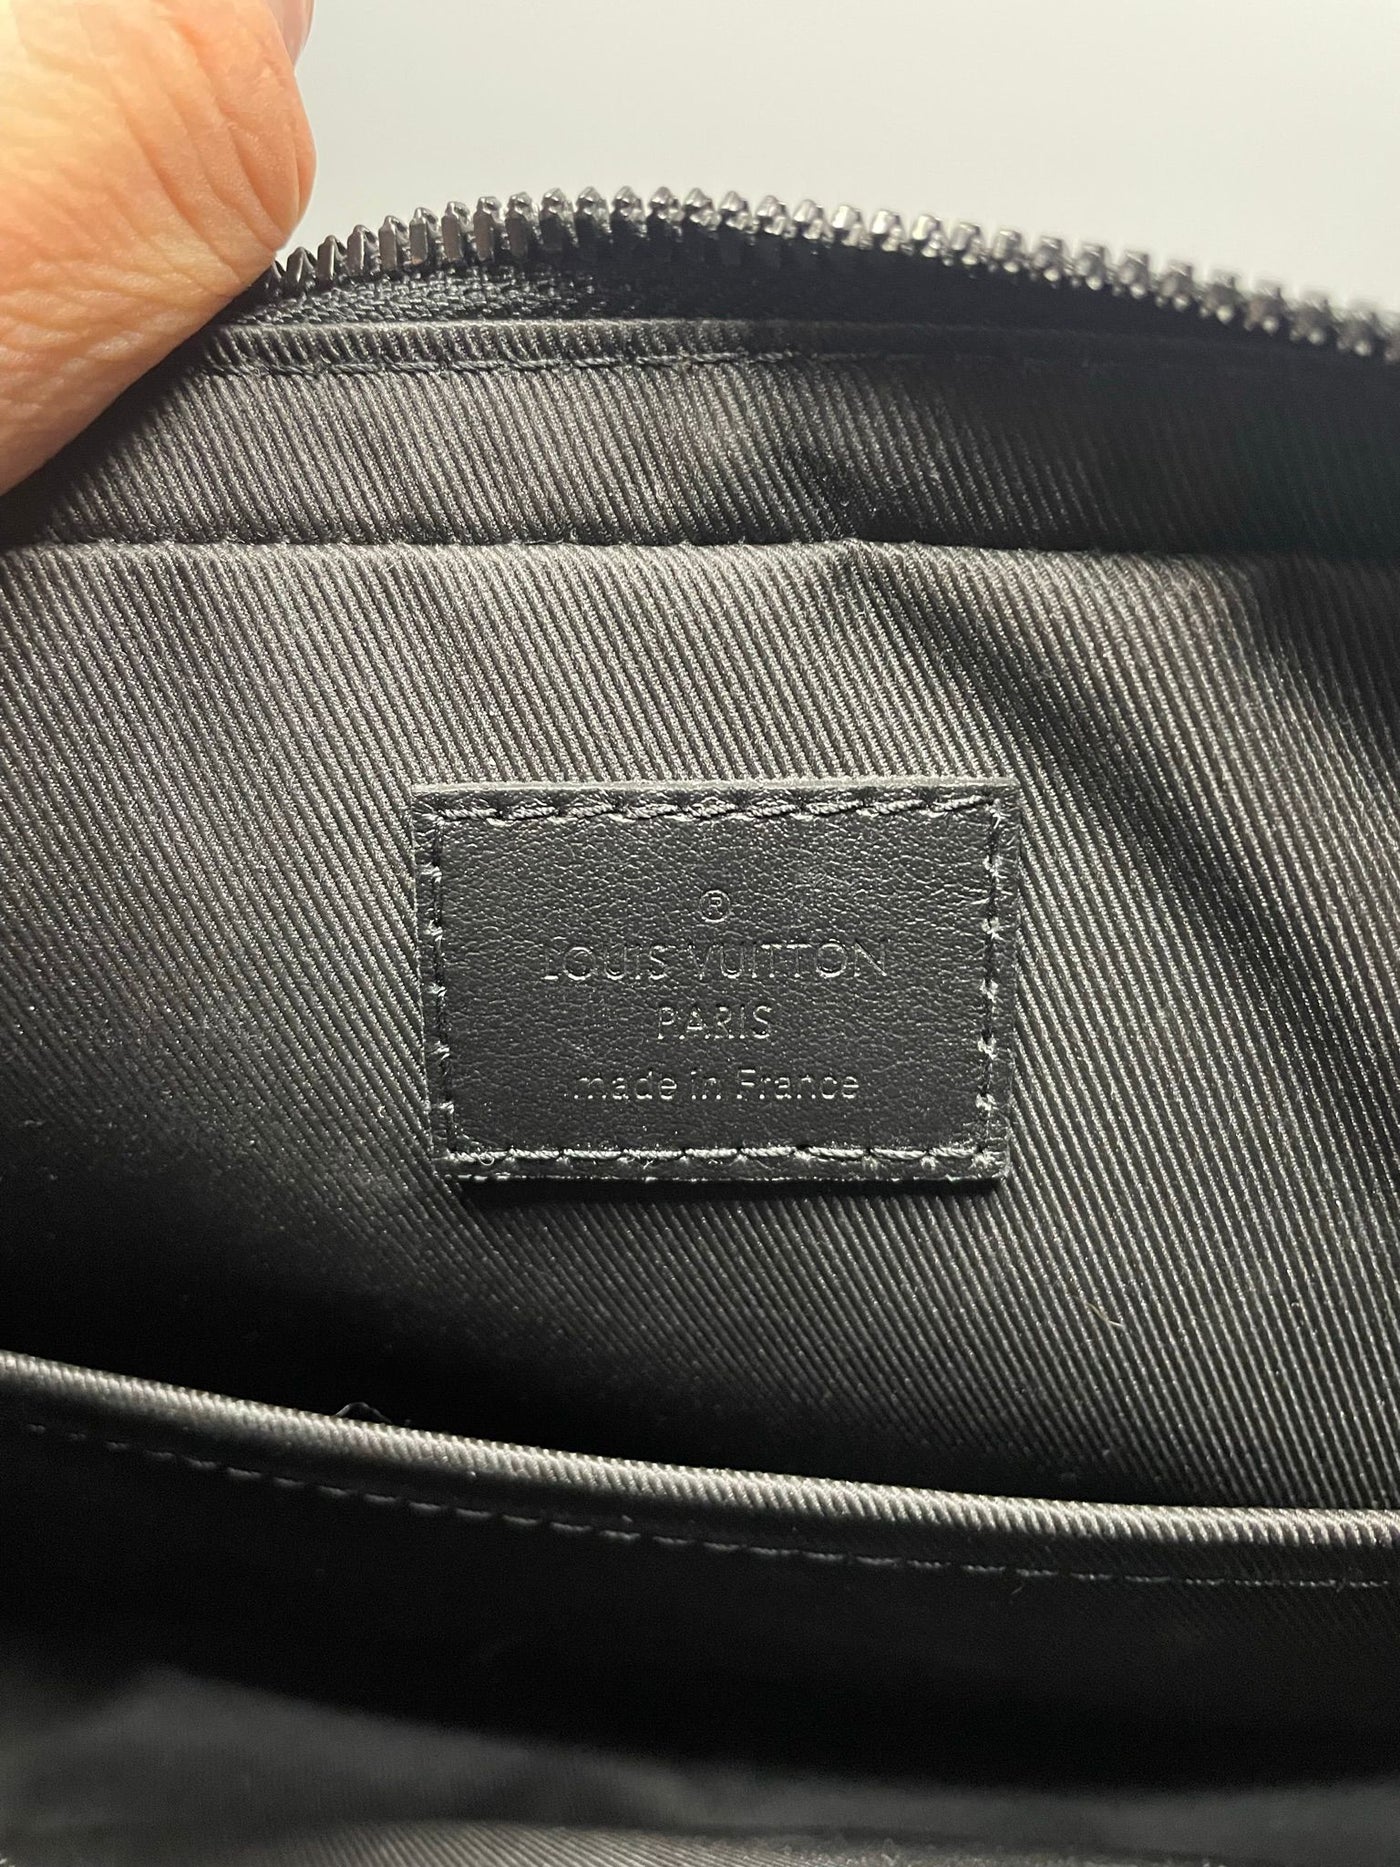 Louis Vuitton Duo Messenger Bag Black